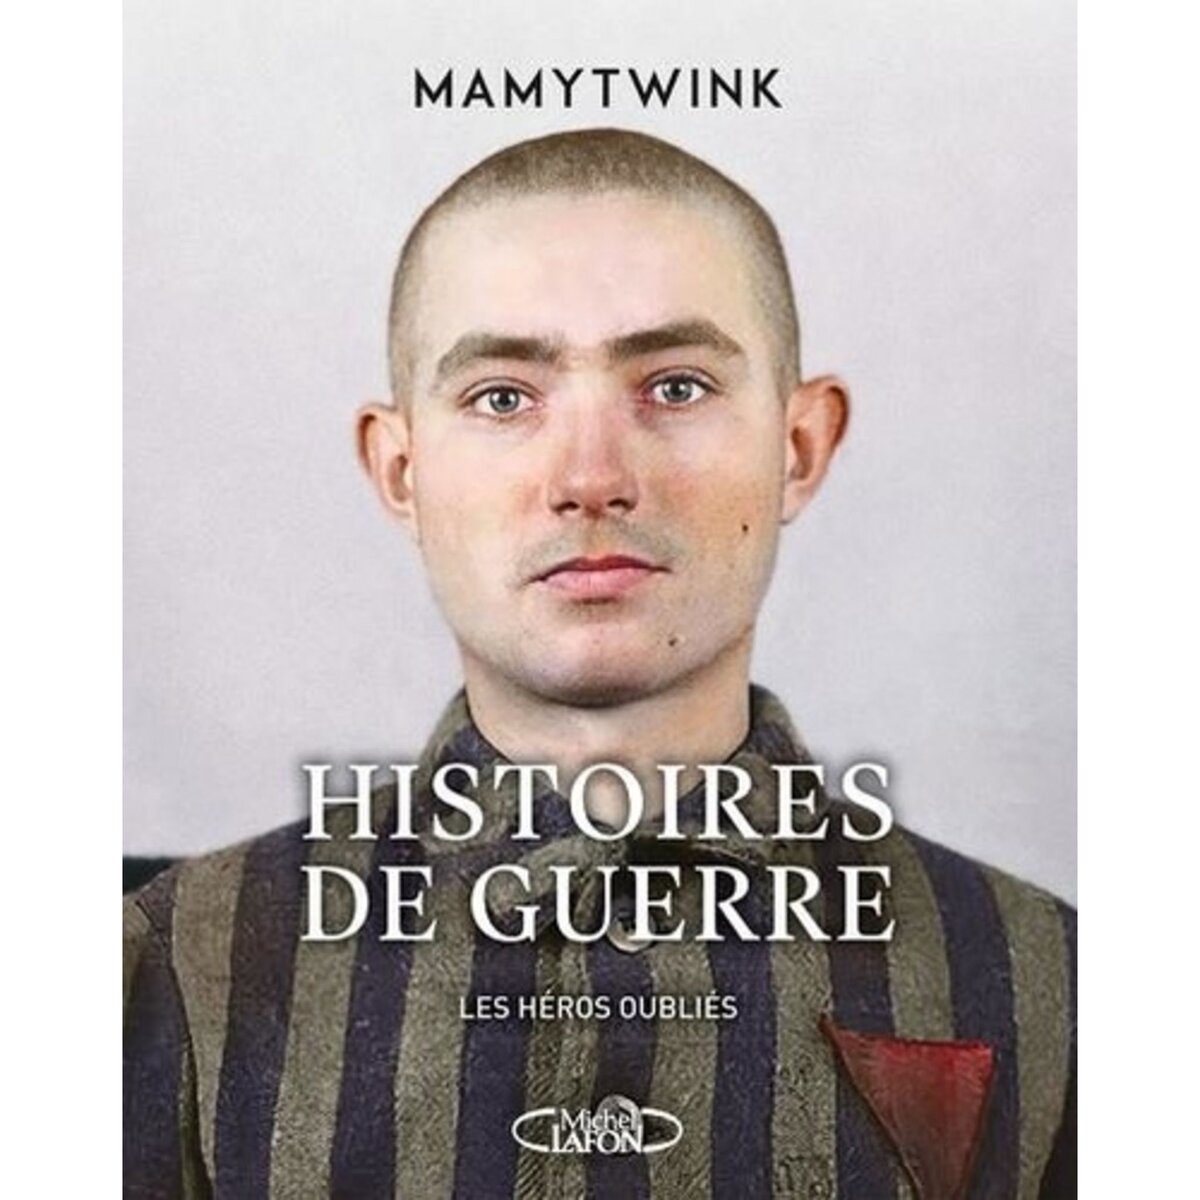  HISTOIRES DE GUERRE. LES HEROS OUBLIES, Mamytwink